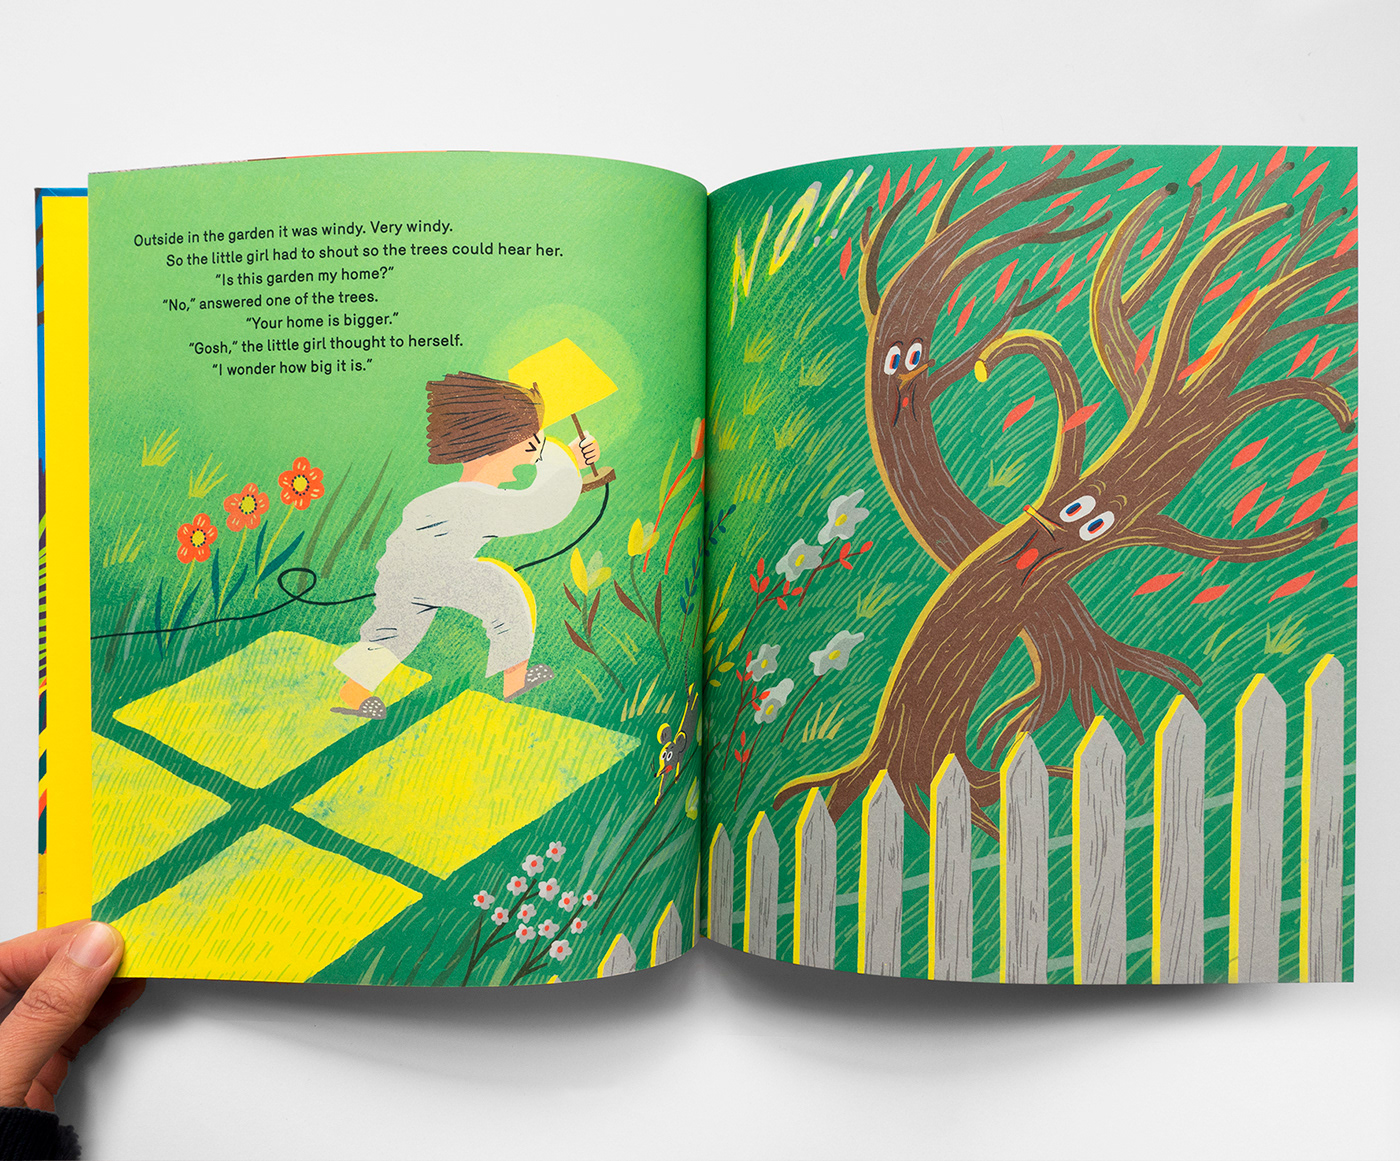 ørsted climate change children's book Green Energy yeji yun w+k amsterdam